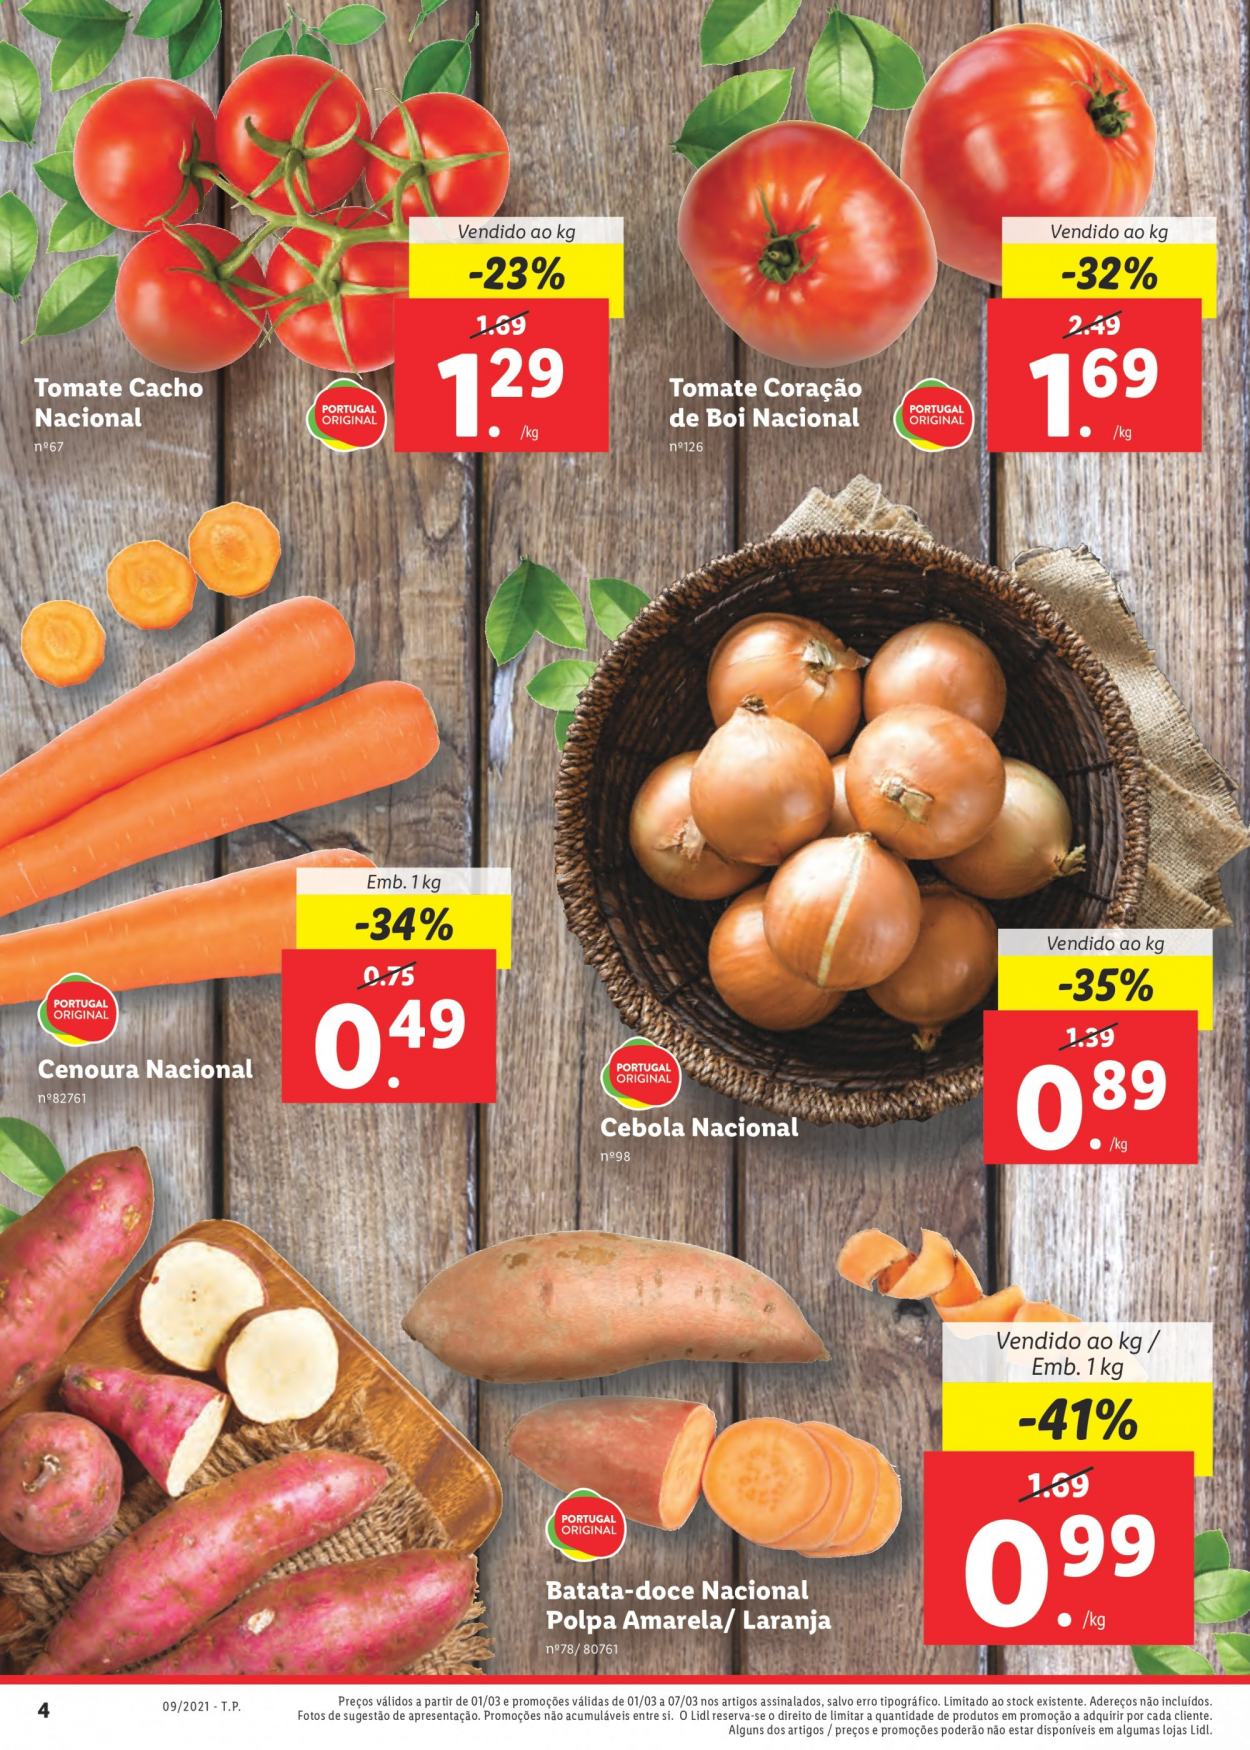 thumbnail - Folheto Lidl - 1.3.2021 - 7.3.2021 - Produtos em promoção - laranja, tomate, batata-doce, batata, cebola, cenoura. Página 4.